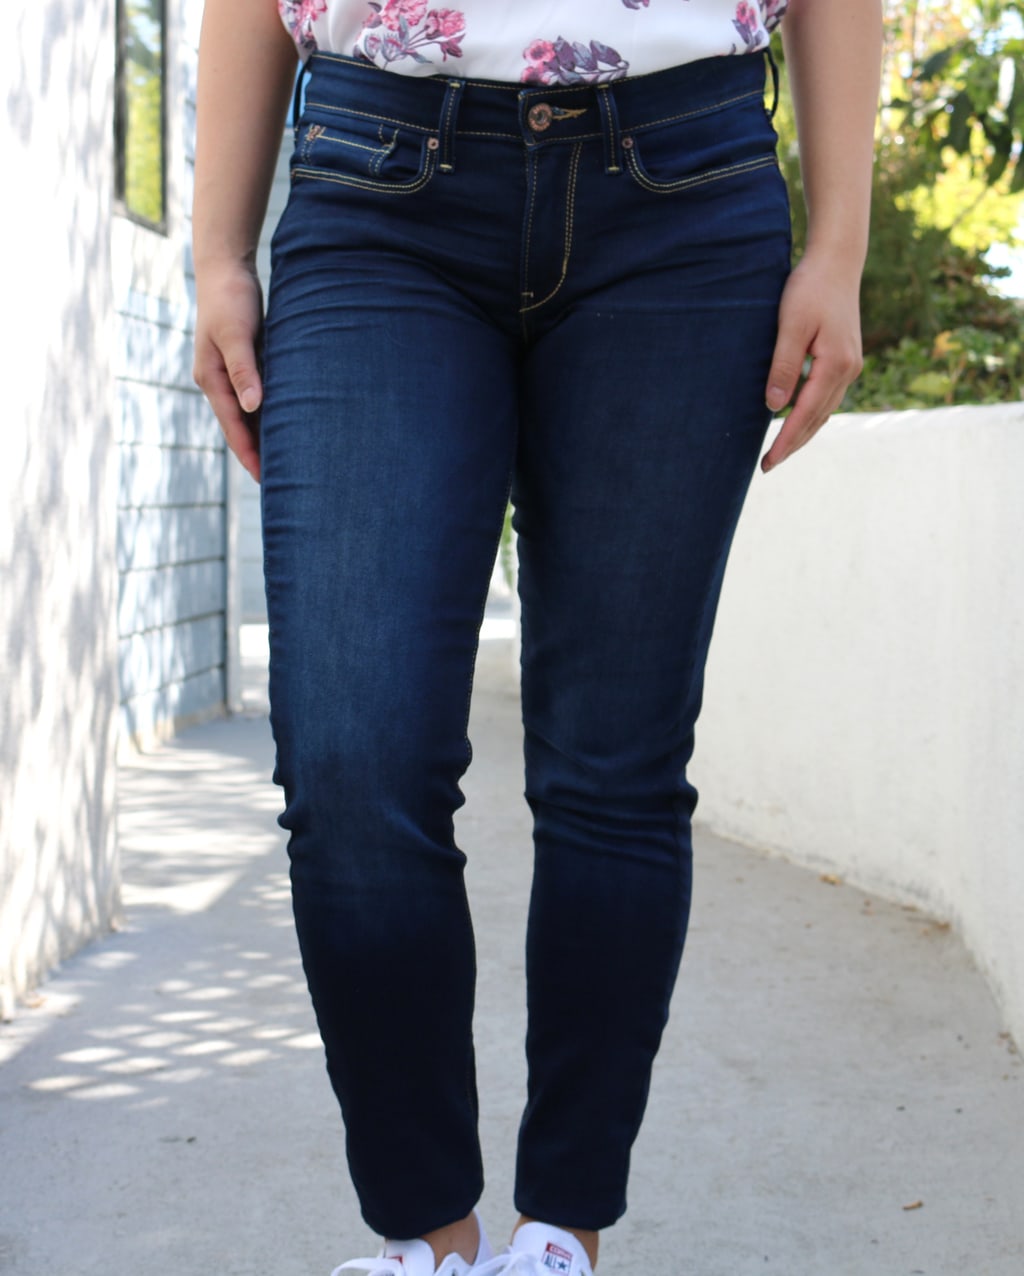 kohlsoutfit-jeans